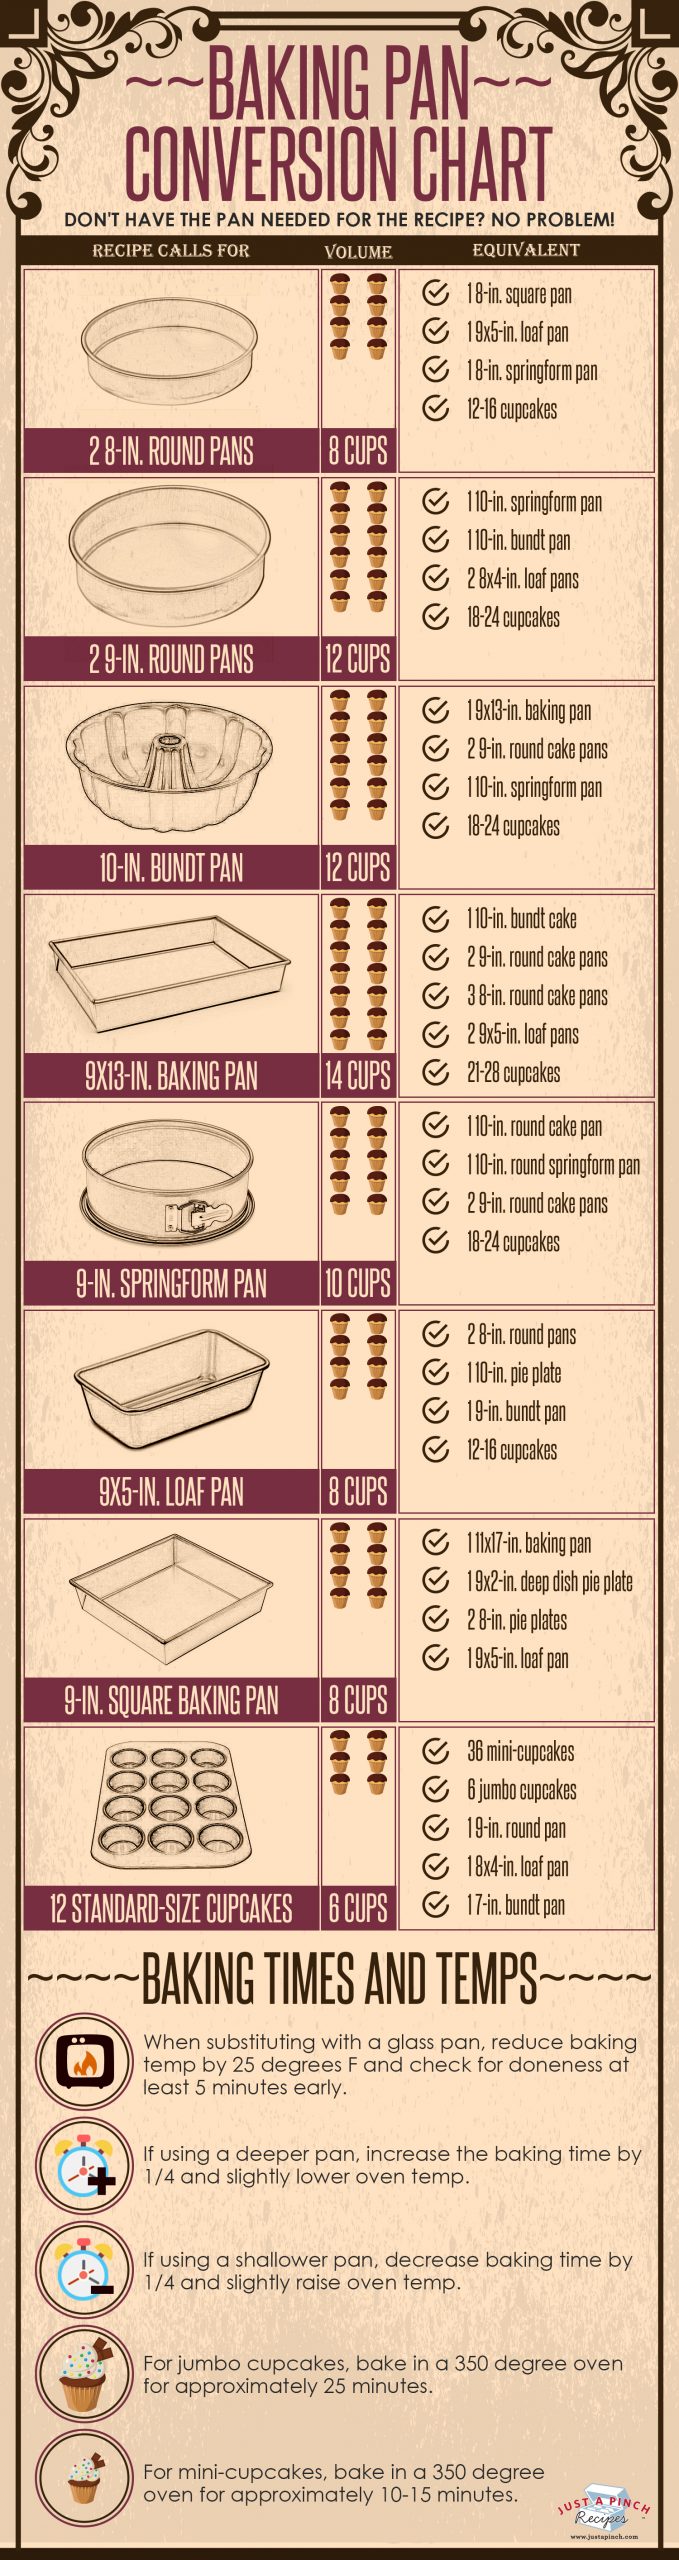 Baking pans conversion chart. Cook pans at same time originally directed